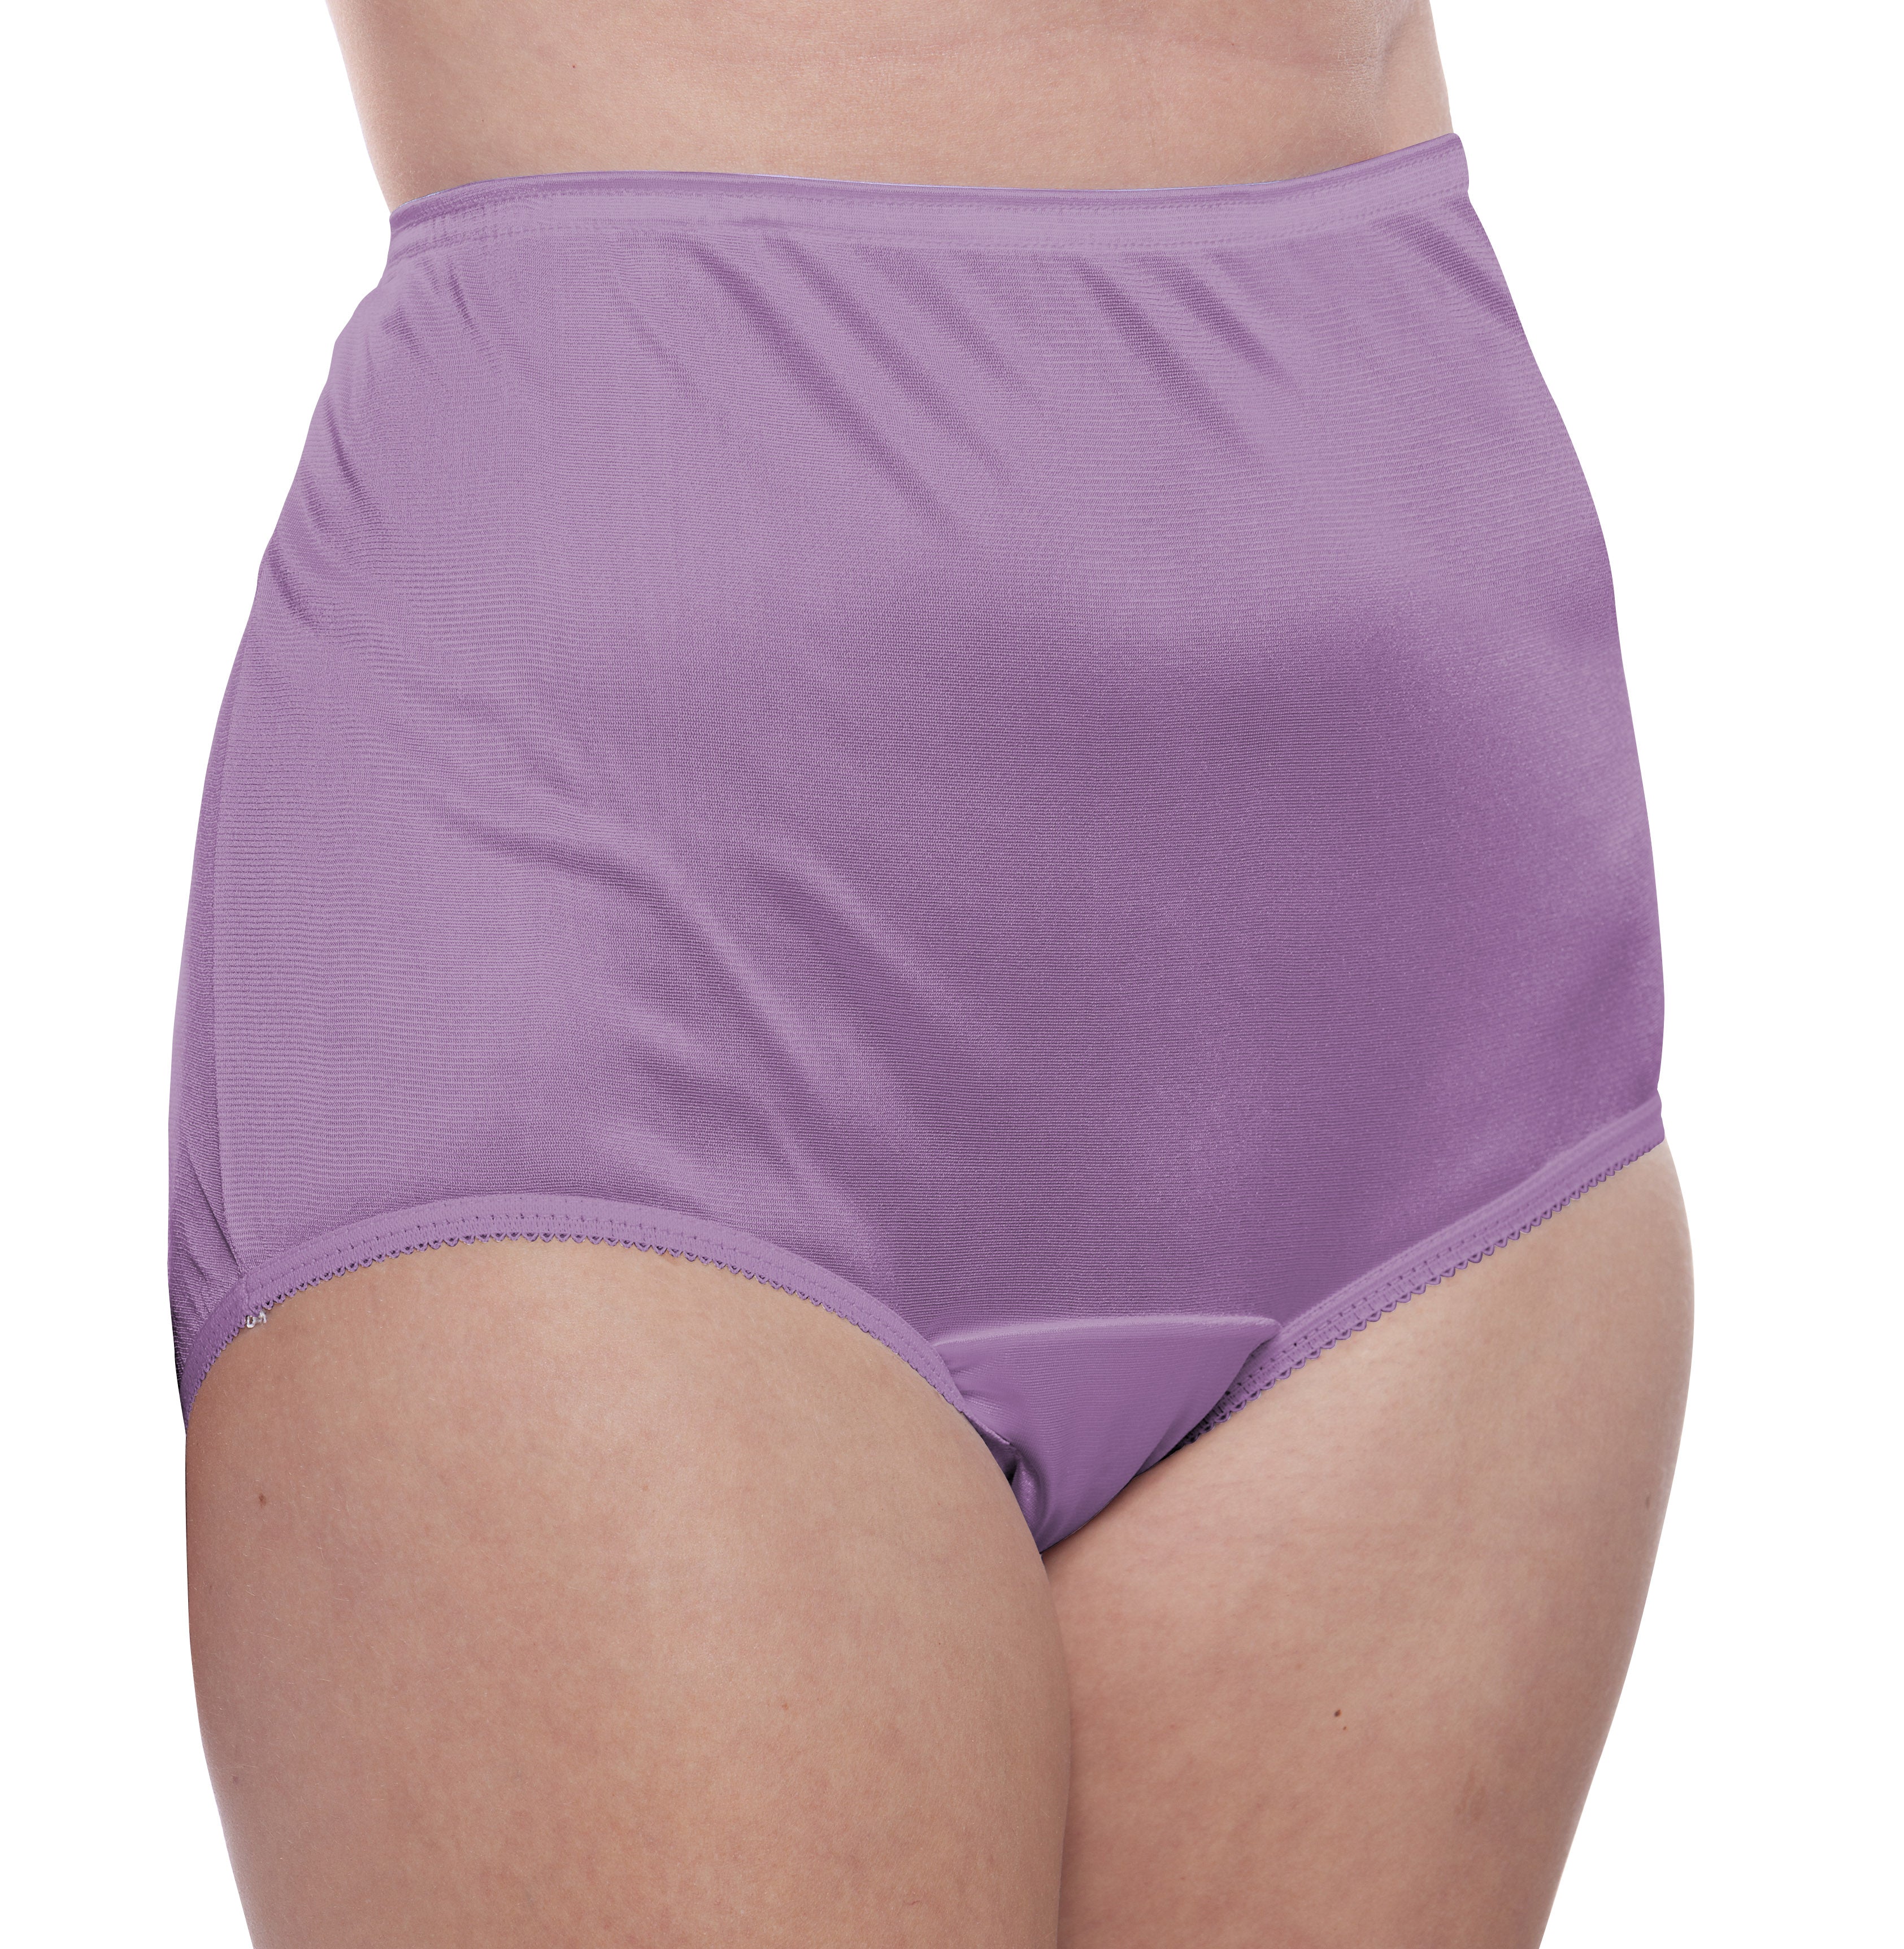 4 Pair Lace Elastic 100% Nylon Assorted Panties Size 6 Carole Panty USA Made